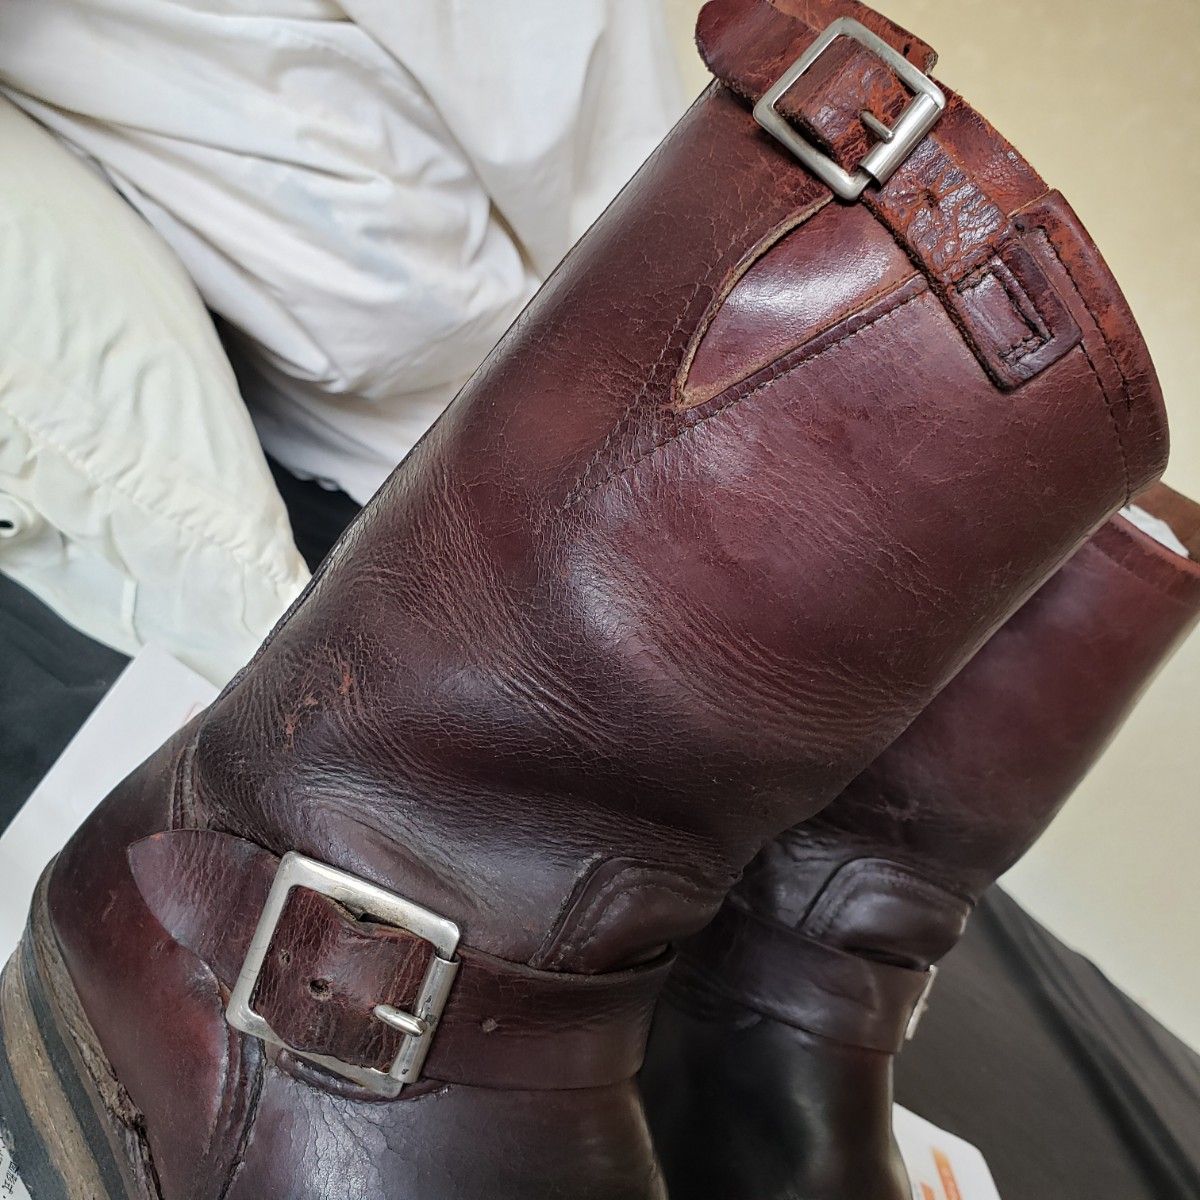 REDWING レッドウィング 8272 エンジニア ブーツ engineer boots 90周年記念モデル 皮革leather